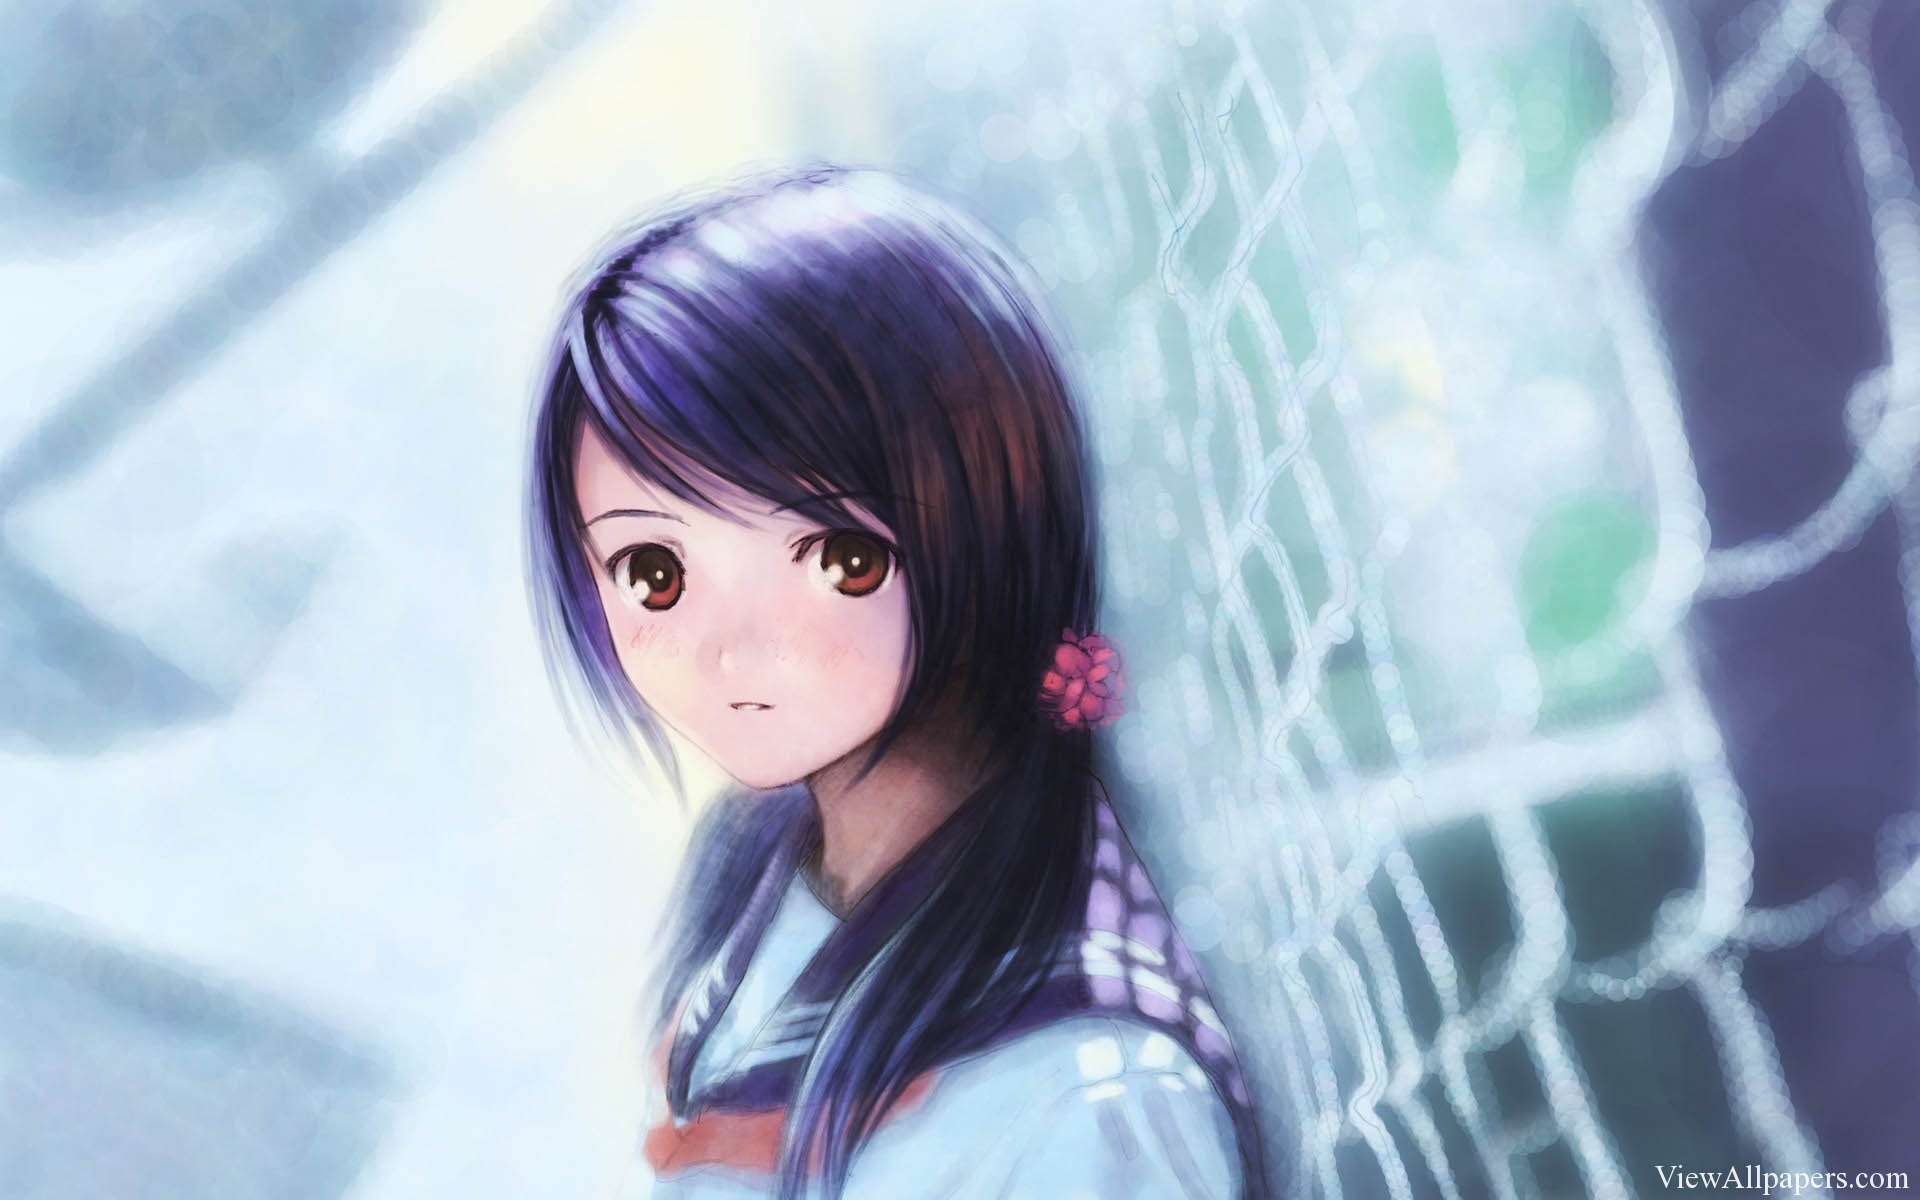 Cute Anime Girl Wallpaper Hd - HD Wallpaper 